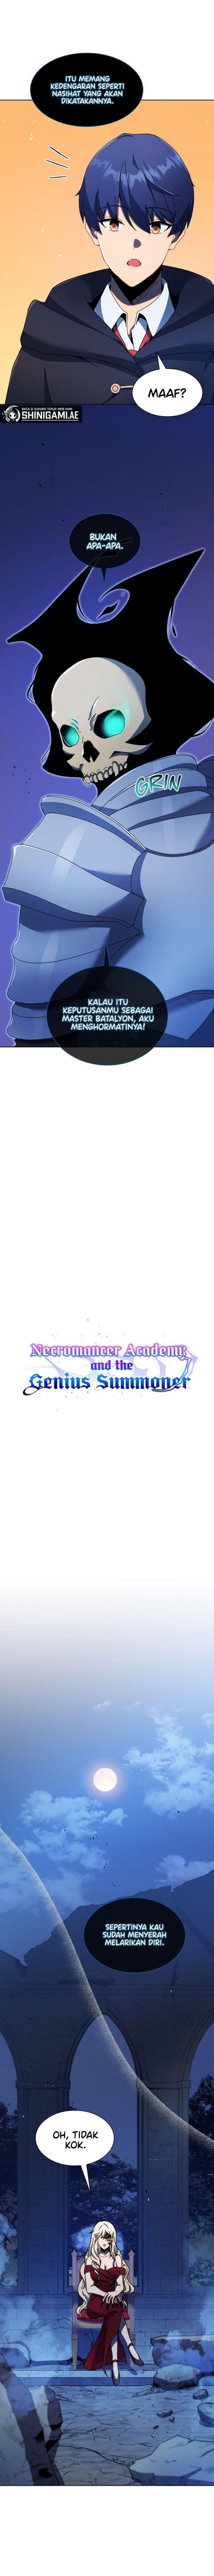 Necromancer Academy’s Genius Summoner Chapter 47